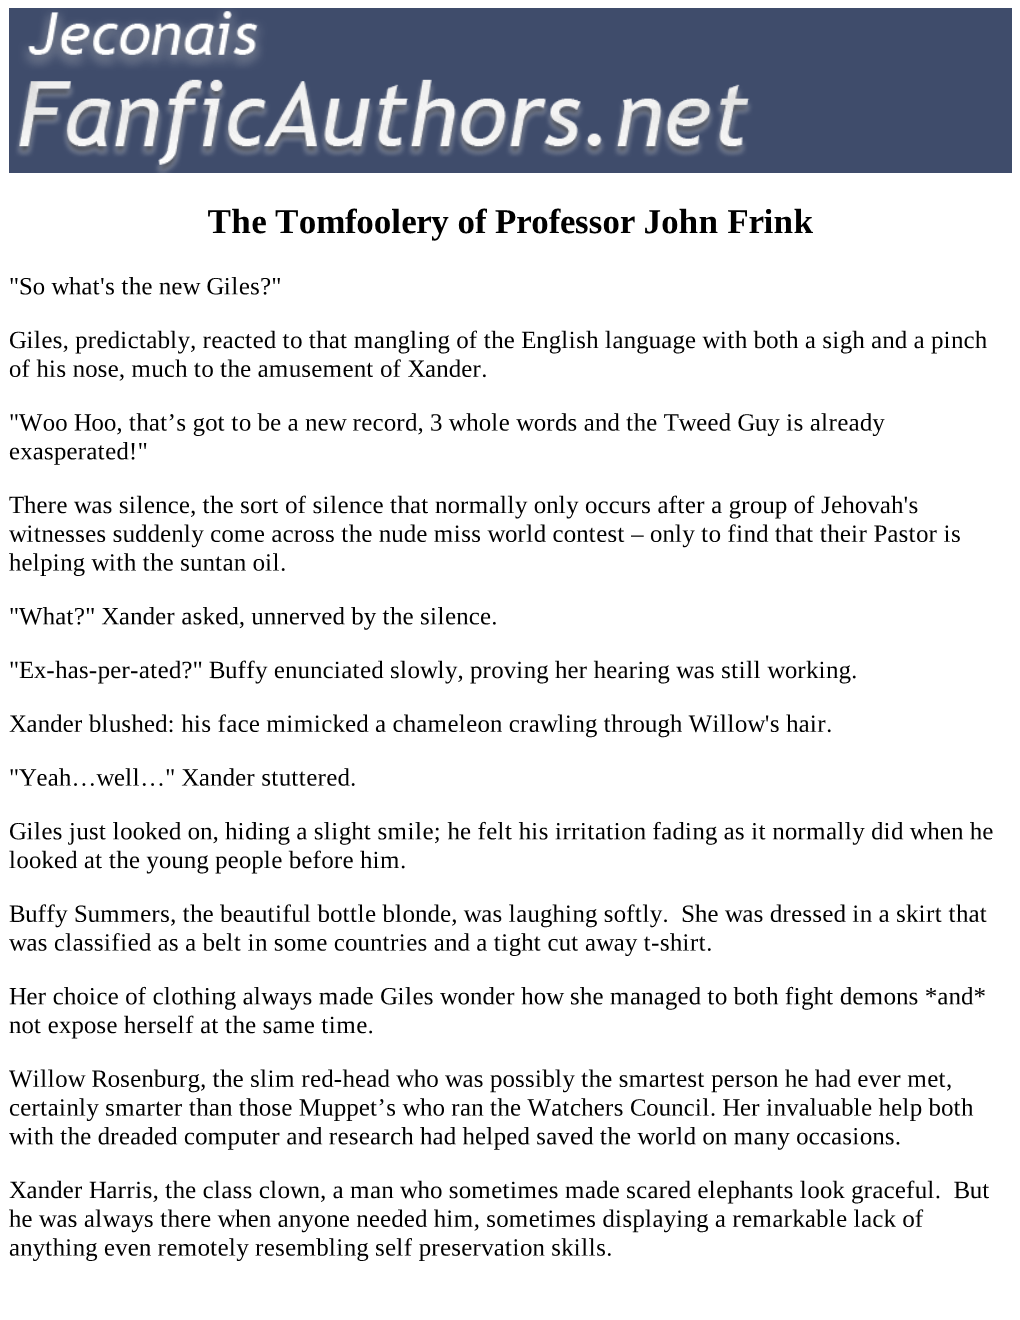 The Tomfoolery of Professor John Frink